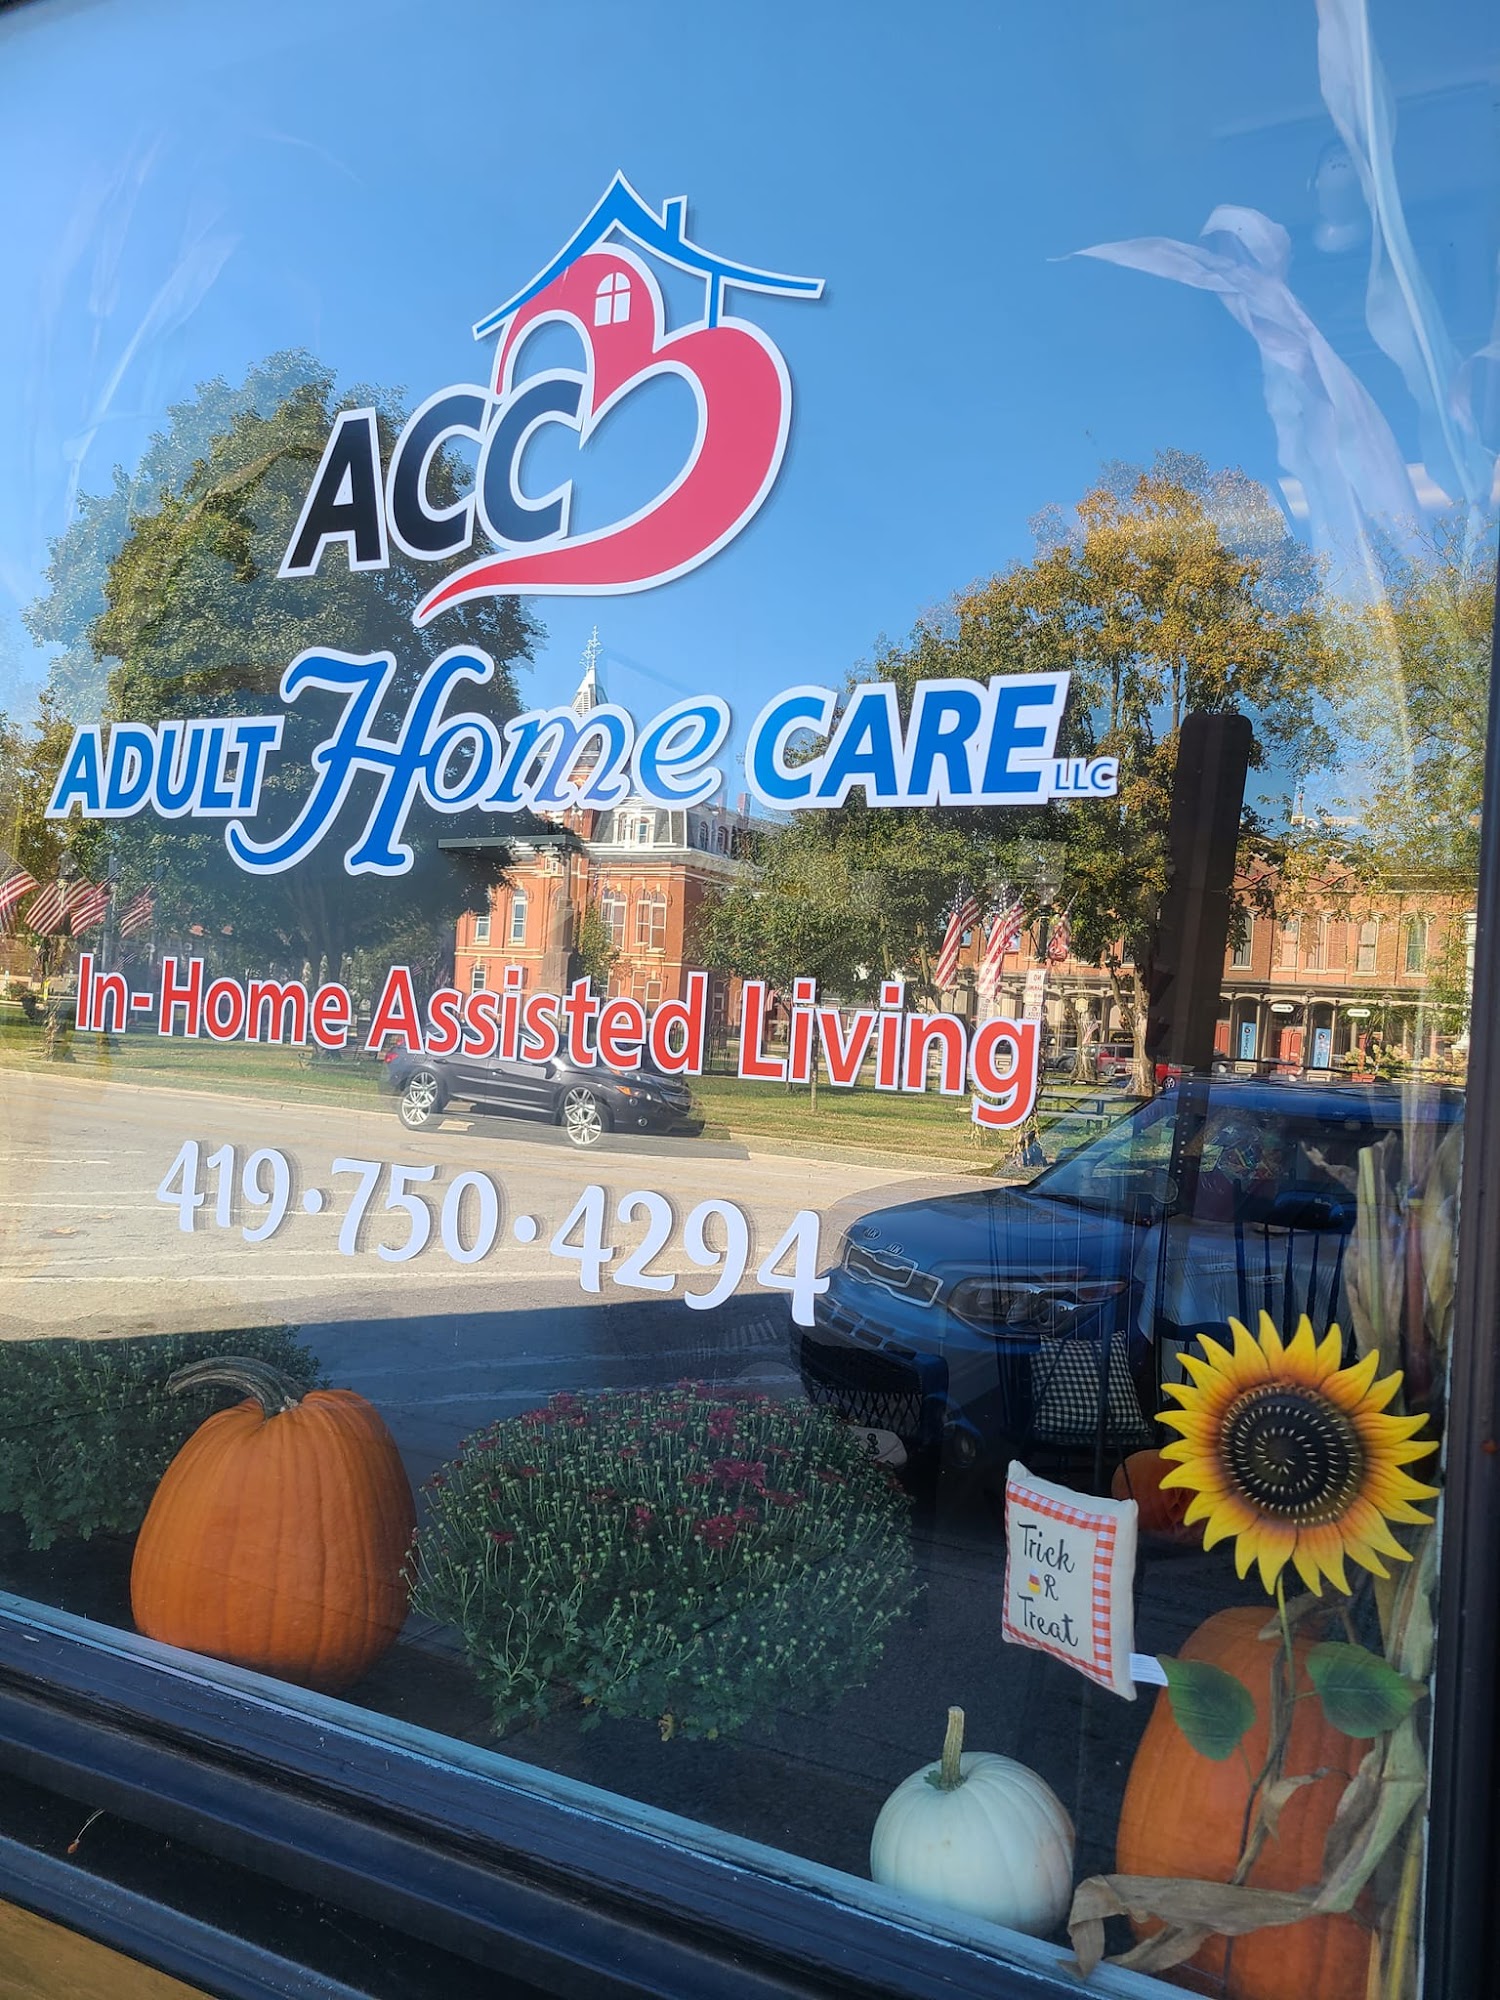 ACC Adult Home Care of Milan Ohio 3 N Main St, Milan Ohio 44846